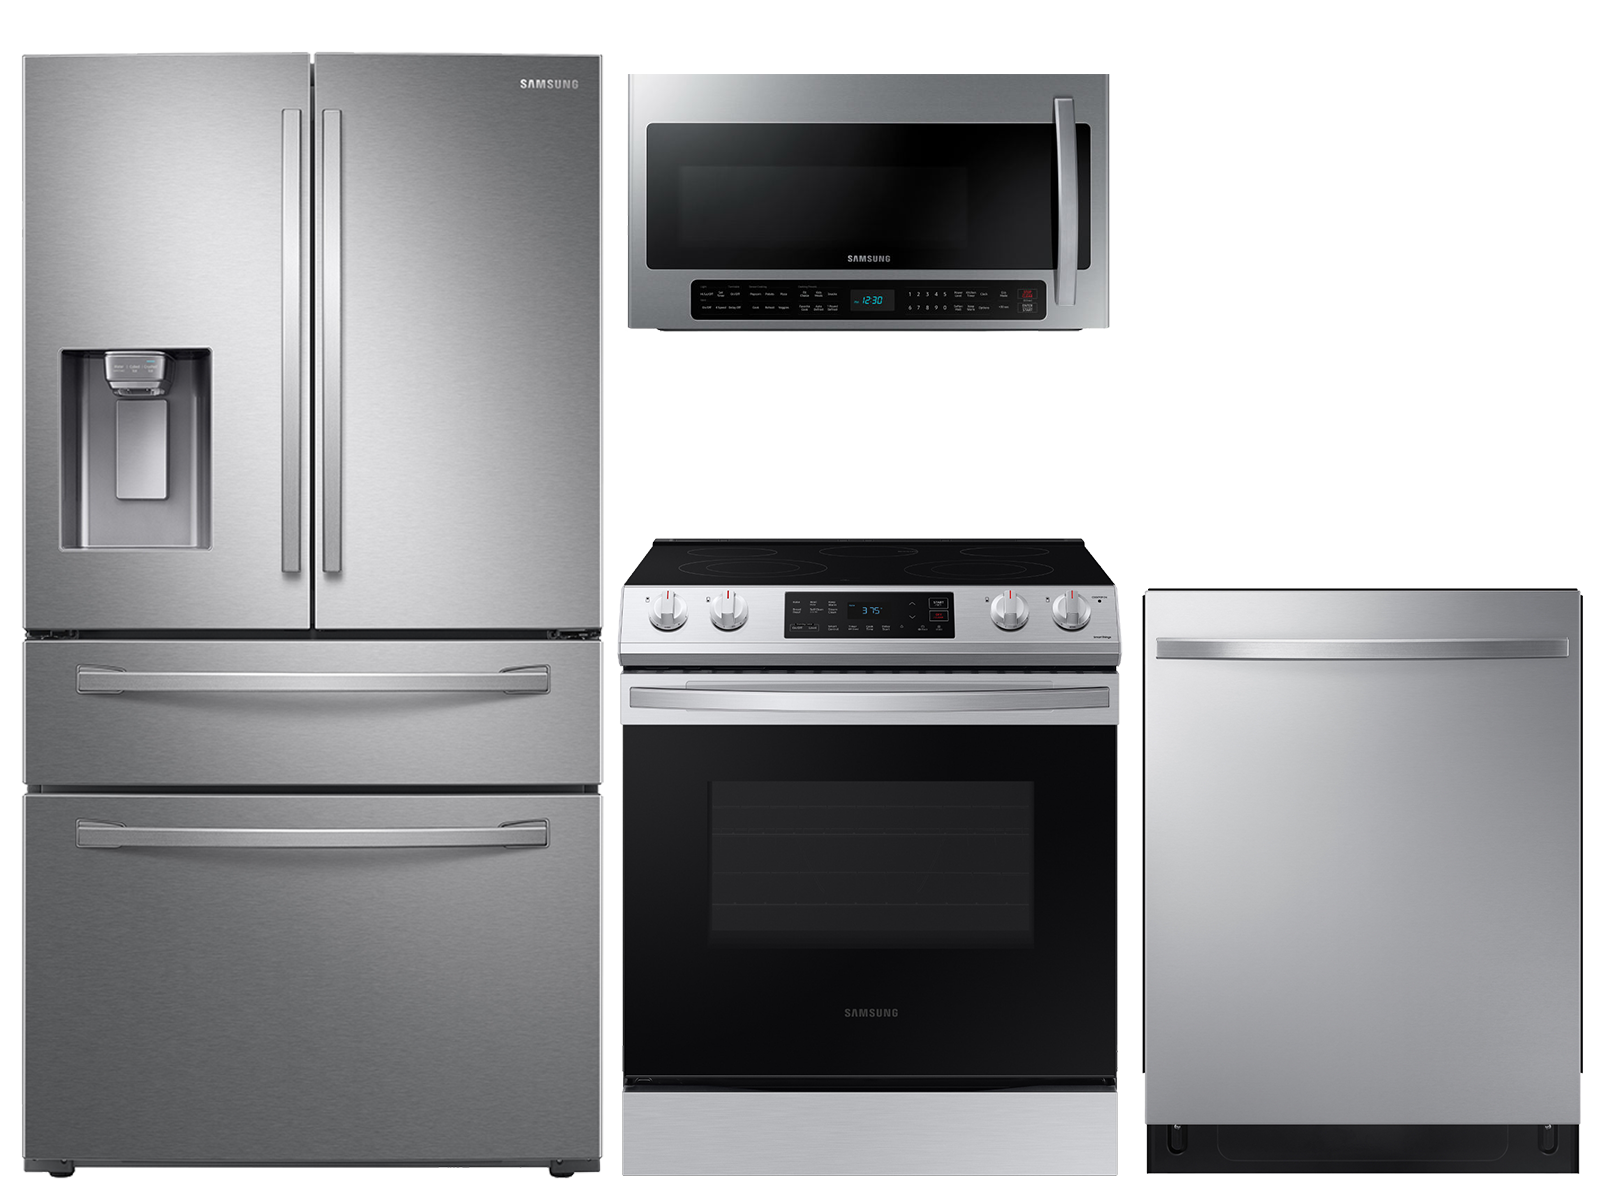 Samsung 28 cu. ft. 4-door refrigerator, 6.3 cu. ft. electric range, 2.1 cu. ft. microwave and 48 dBA modern-look dishwasher package